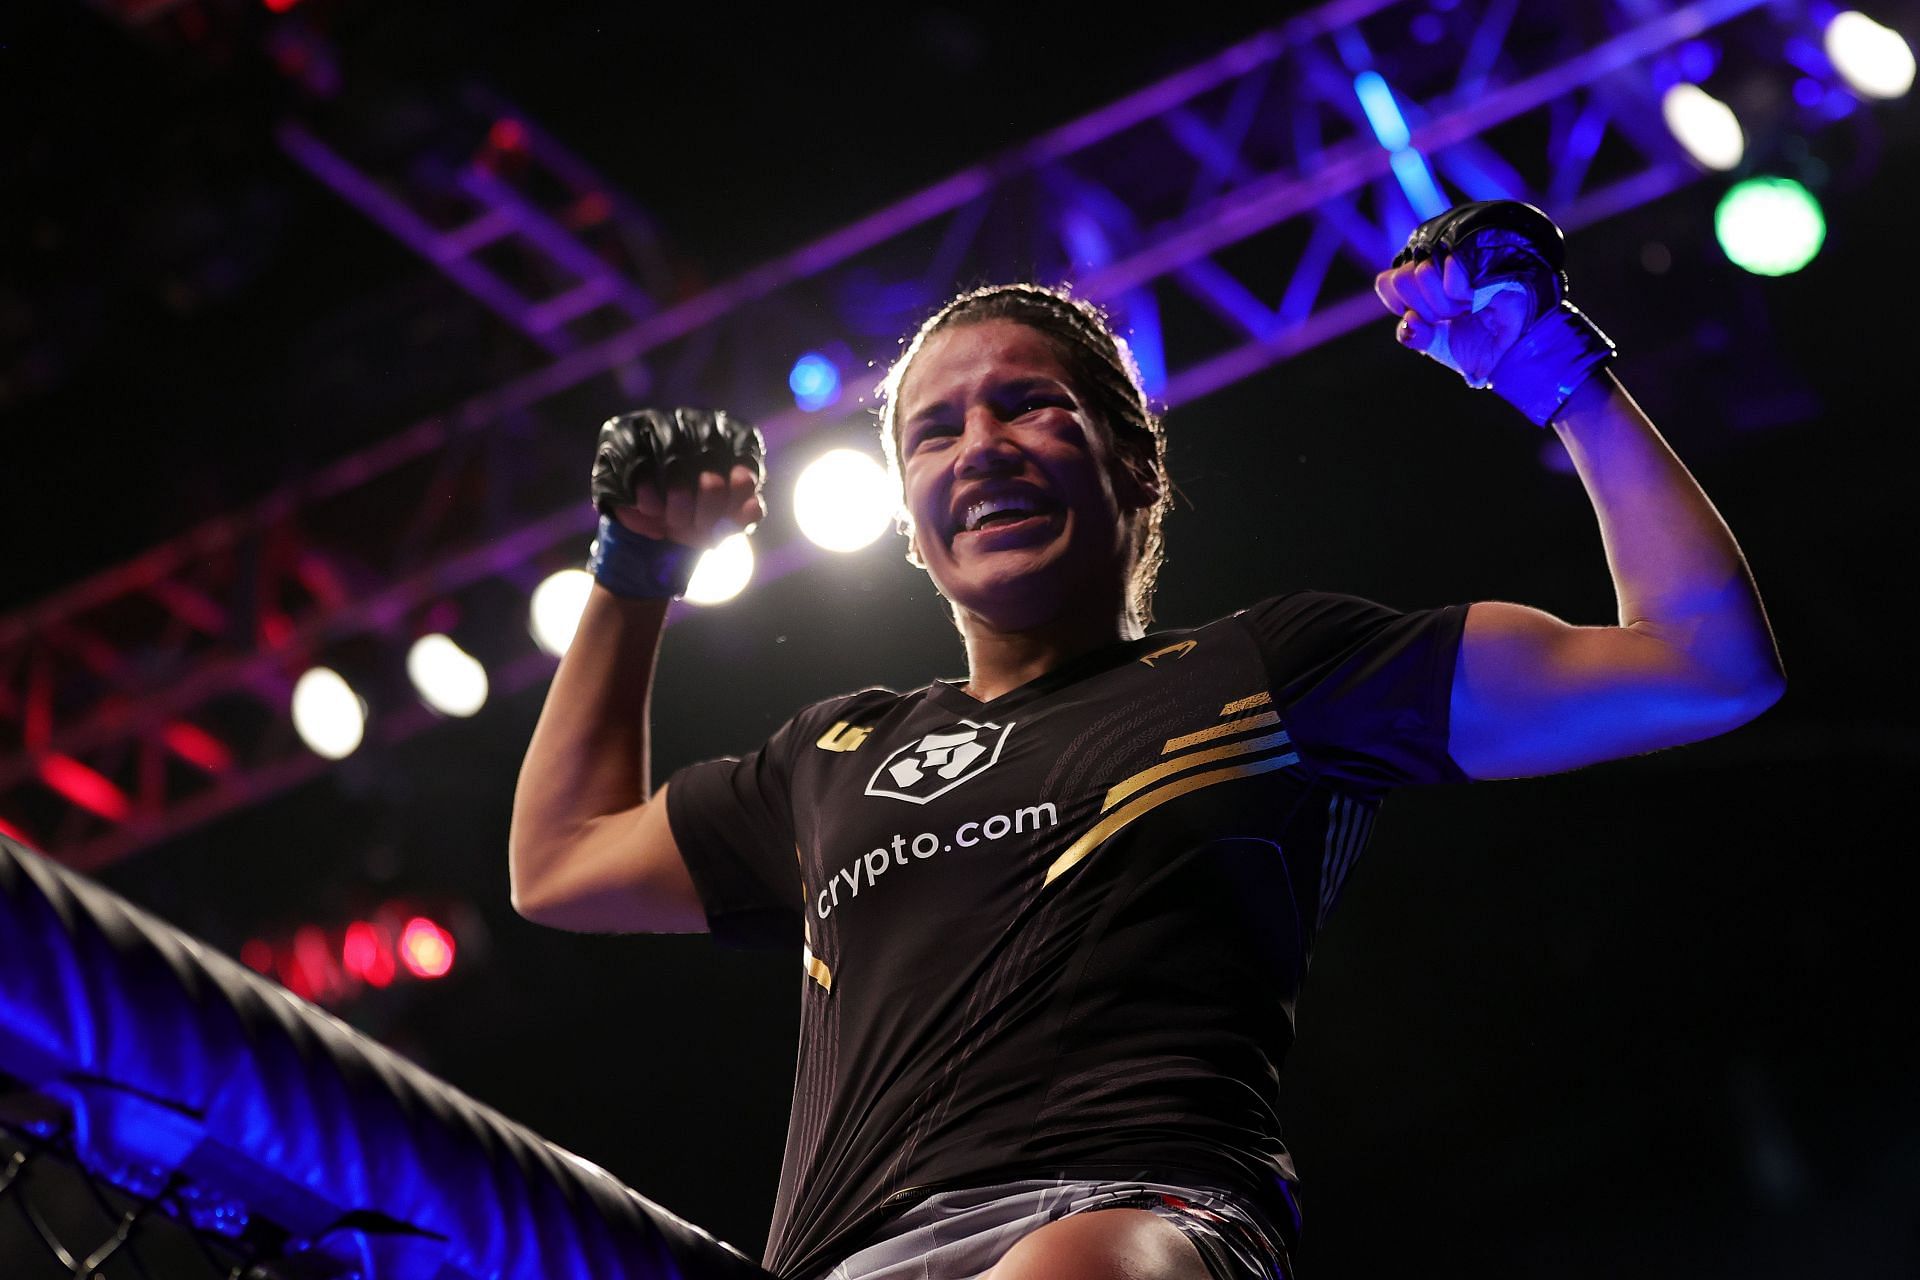 UFC 269: Amanda Nunes vs. Julianna Pena